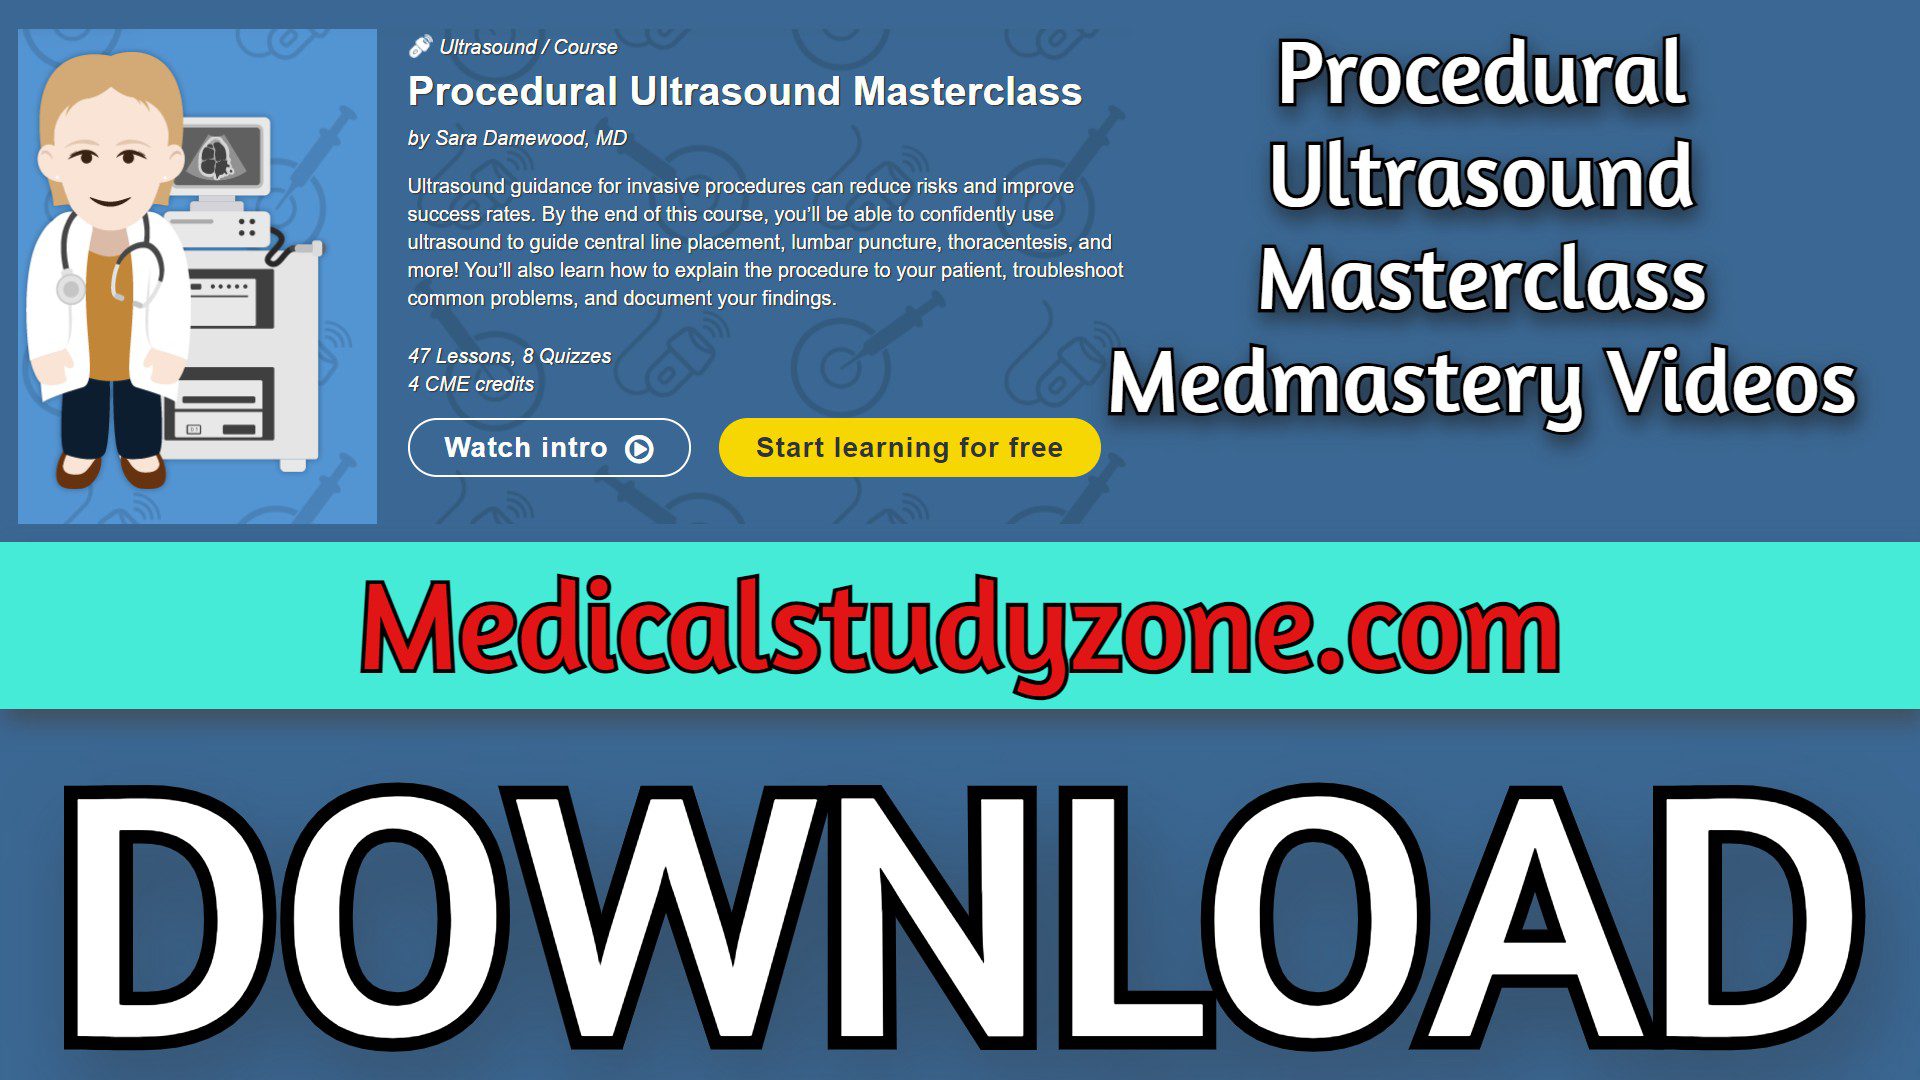 Procedural Ultrasound Masterclass | Medmastery 2023 Videos Free Download